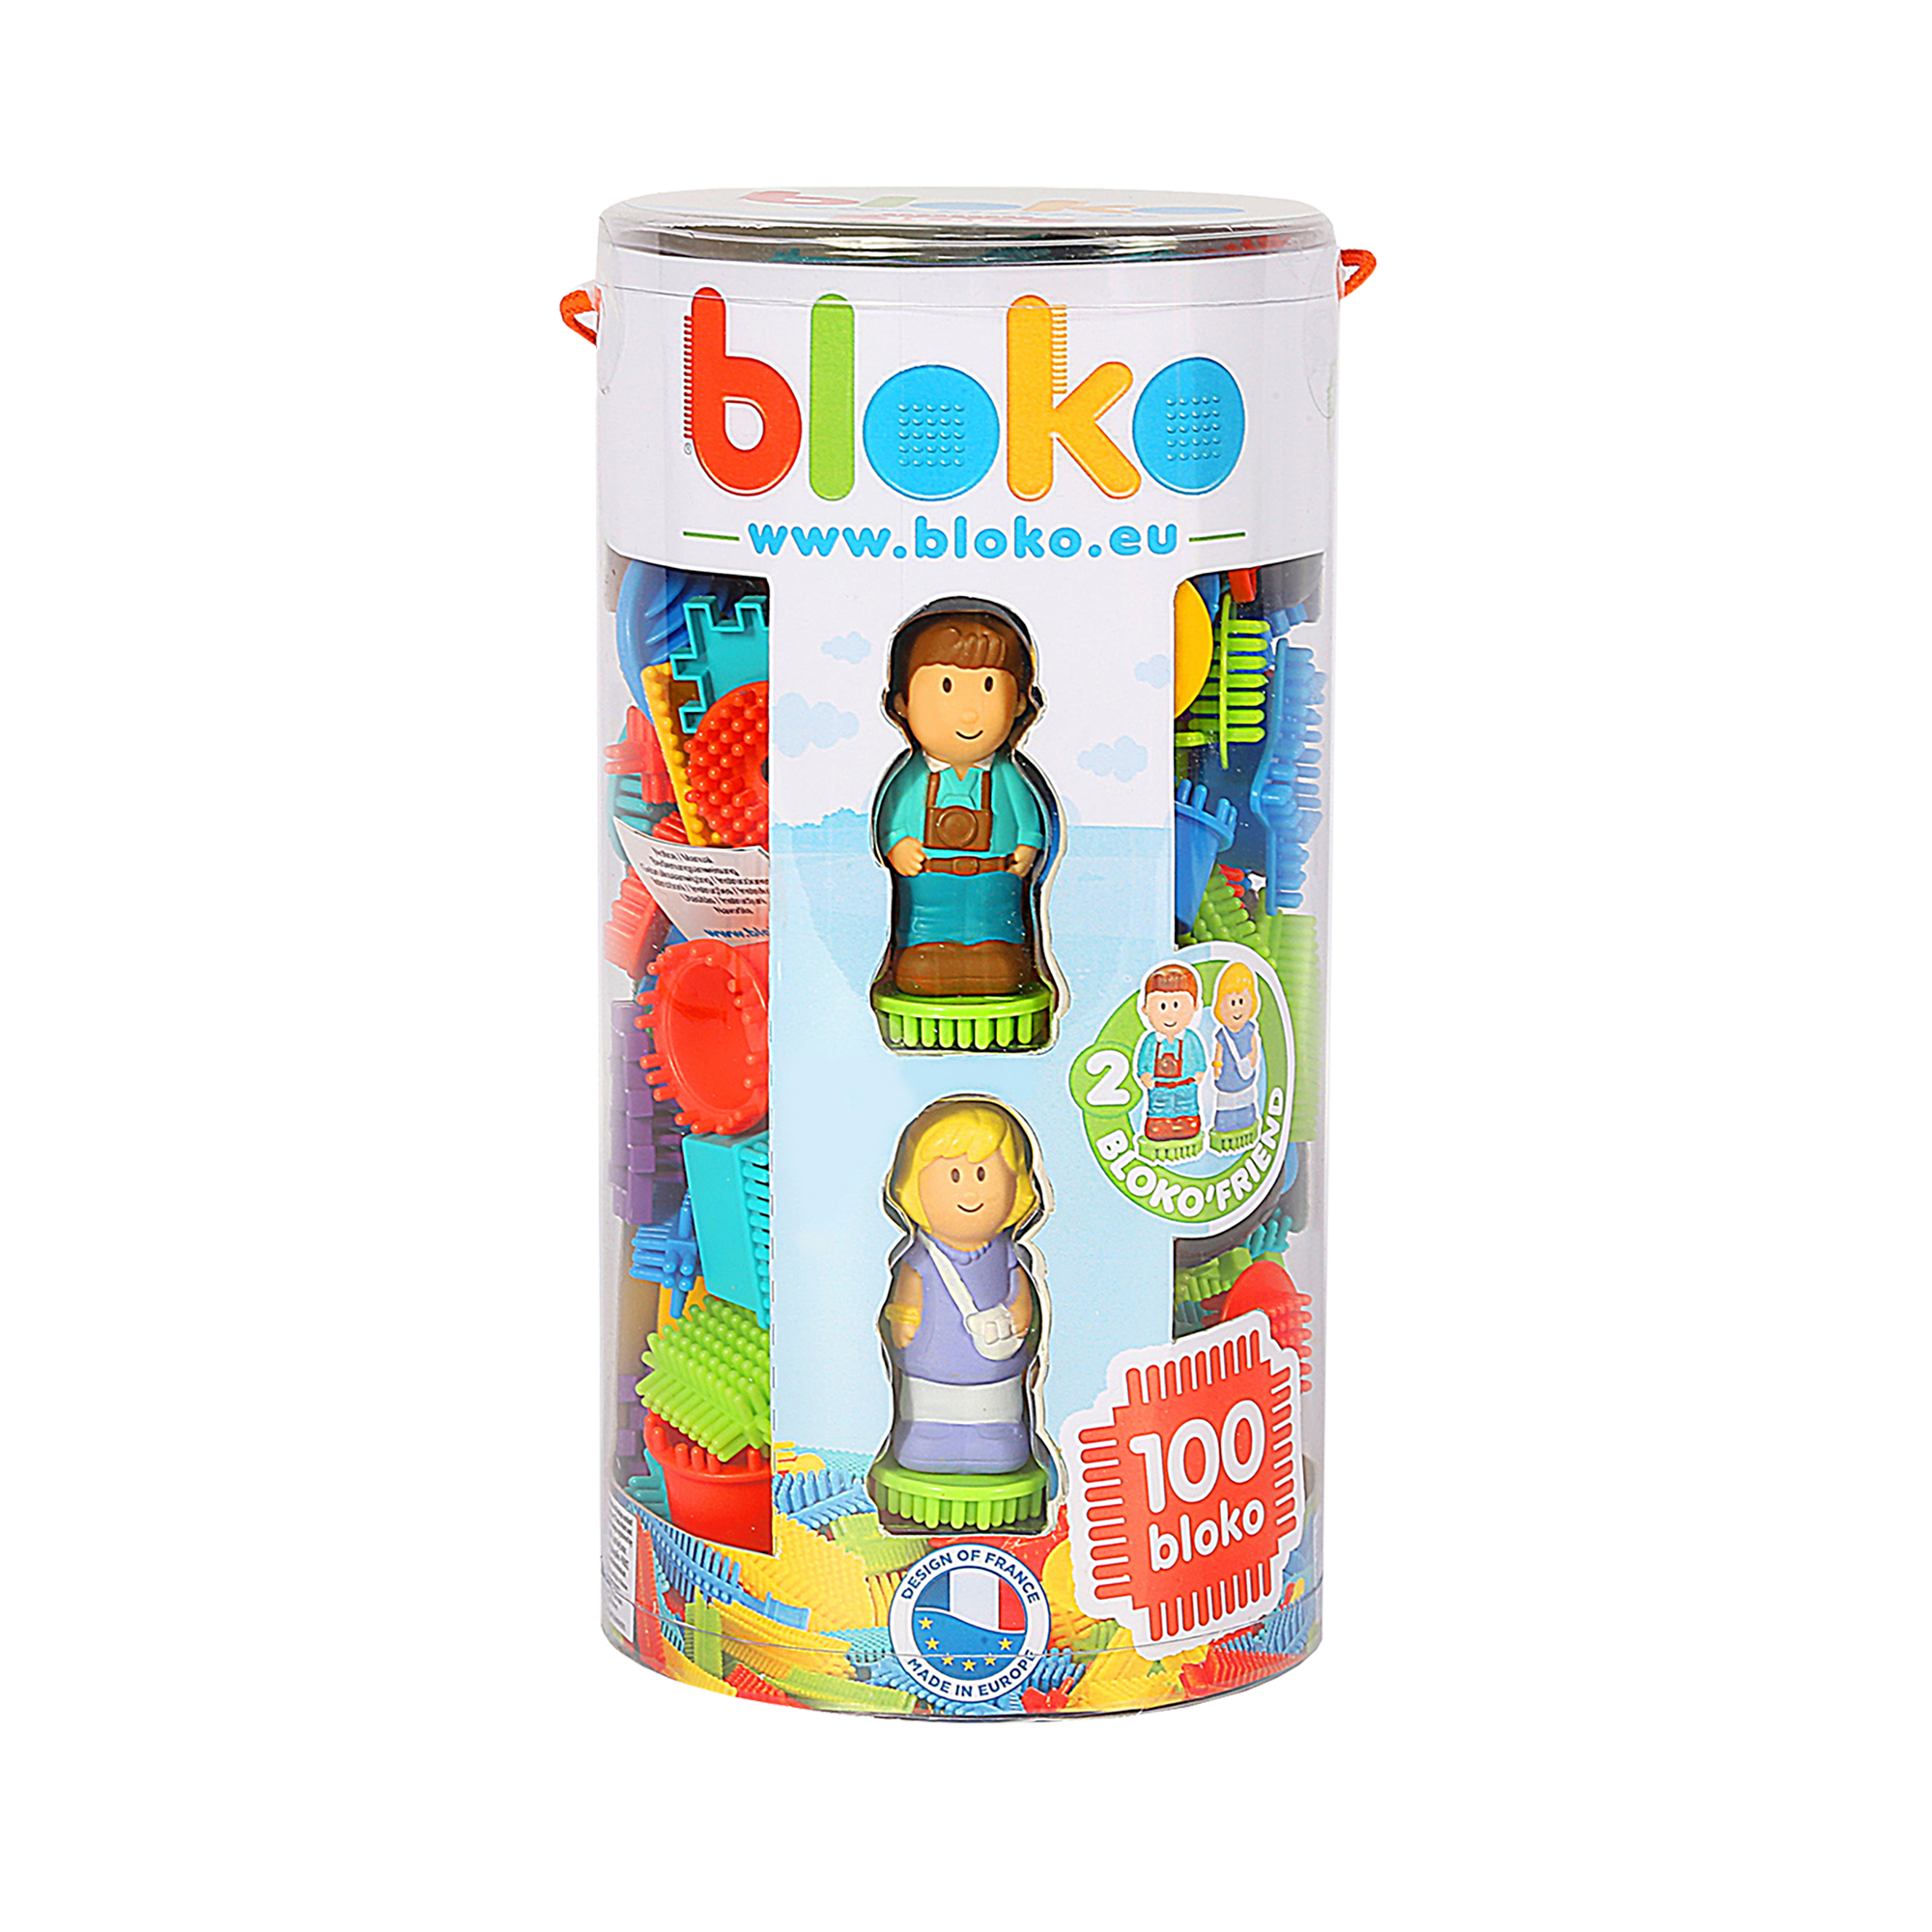 Bloko - 100 Pieces Tube with 2 Bloko 3D Figures - family